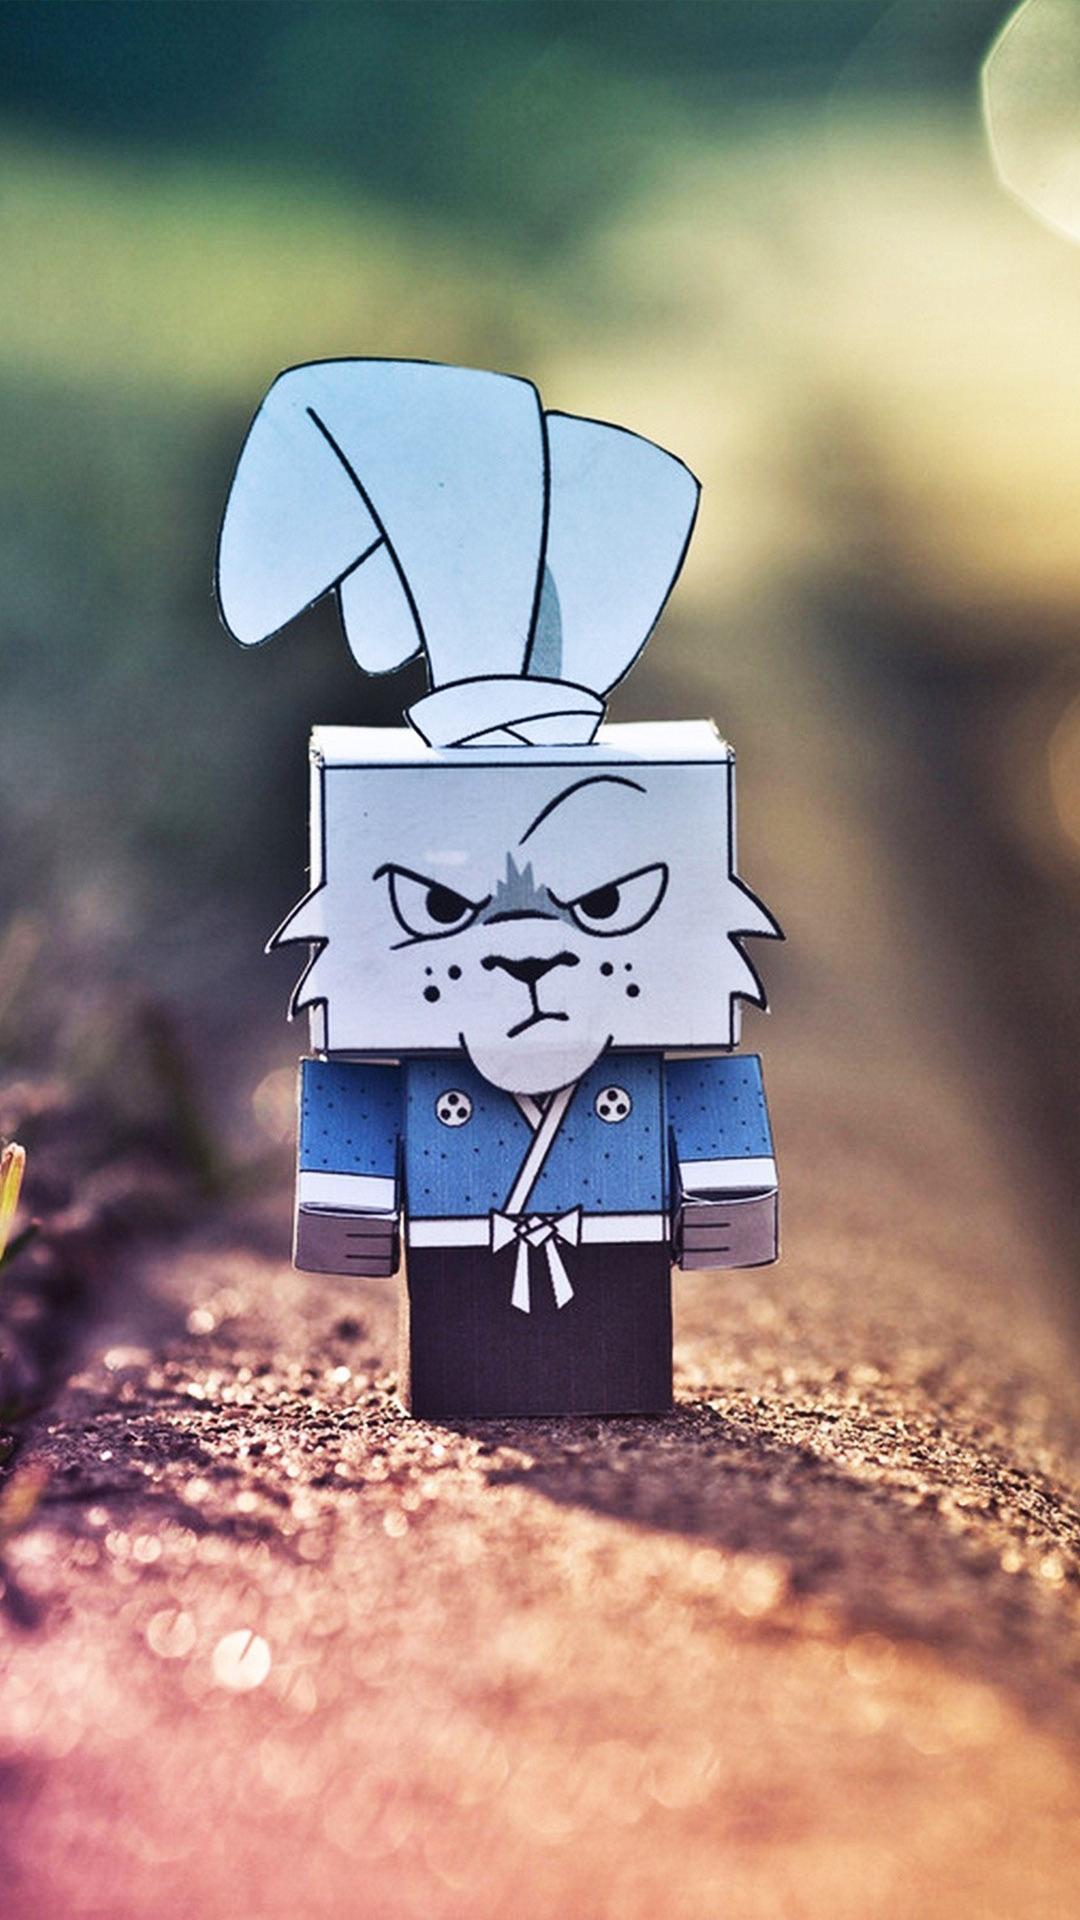 Cute Grumpy Cardboard Rabbit Android Wallpaper free download